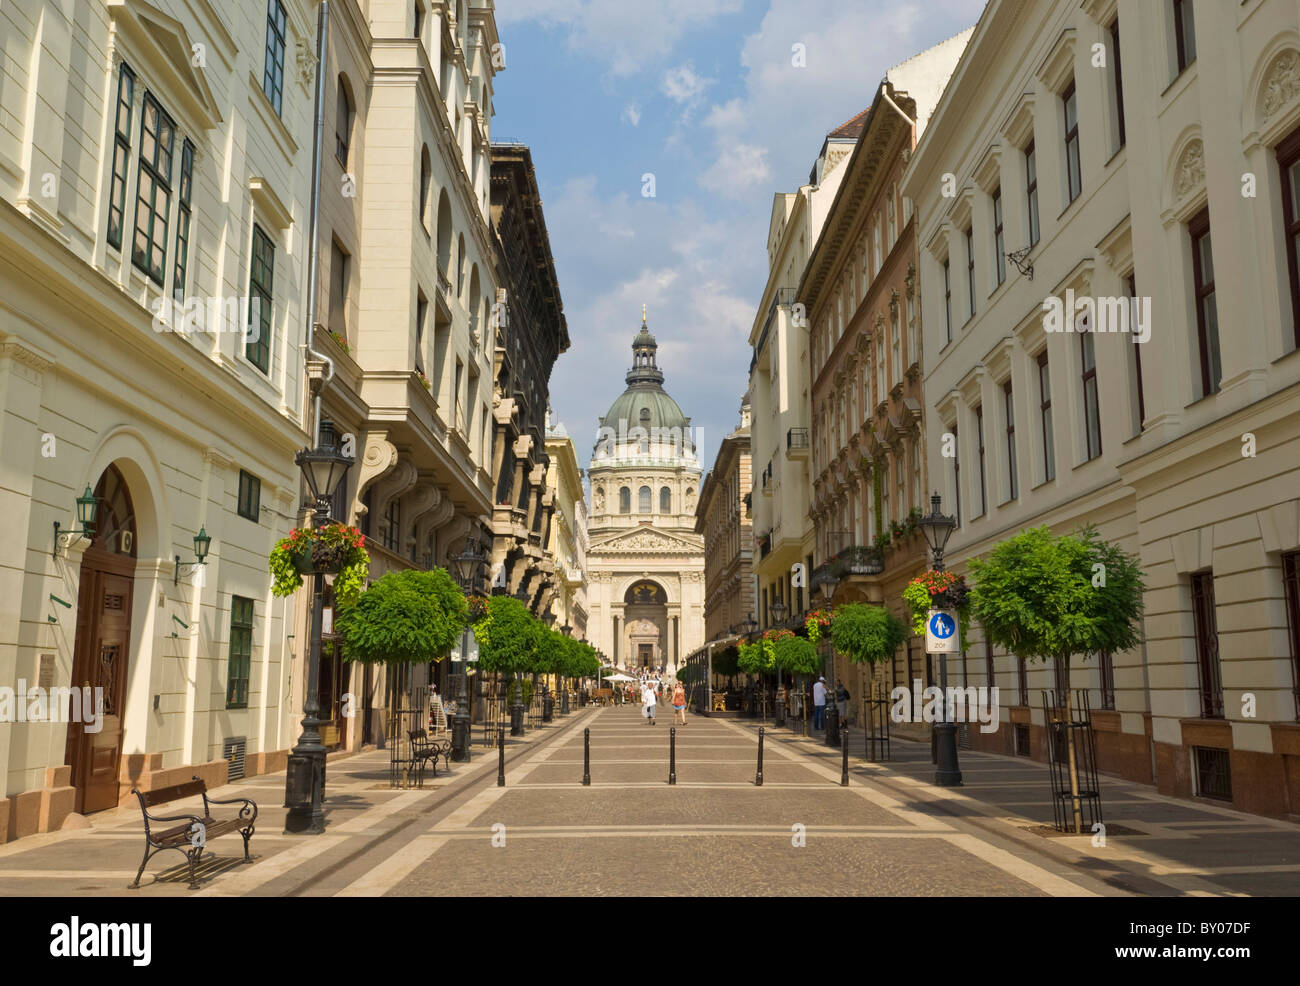 St Stephen's basilica dome, Szent Istvan Bazilika, and the shopping street Zrinyi Utca, Budapest, Hungary, Europe, EU Stock Photo